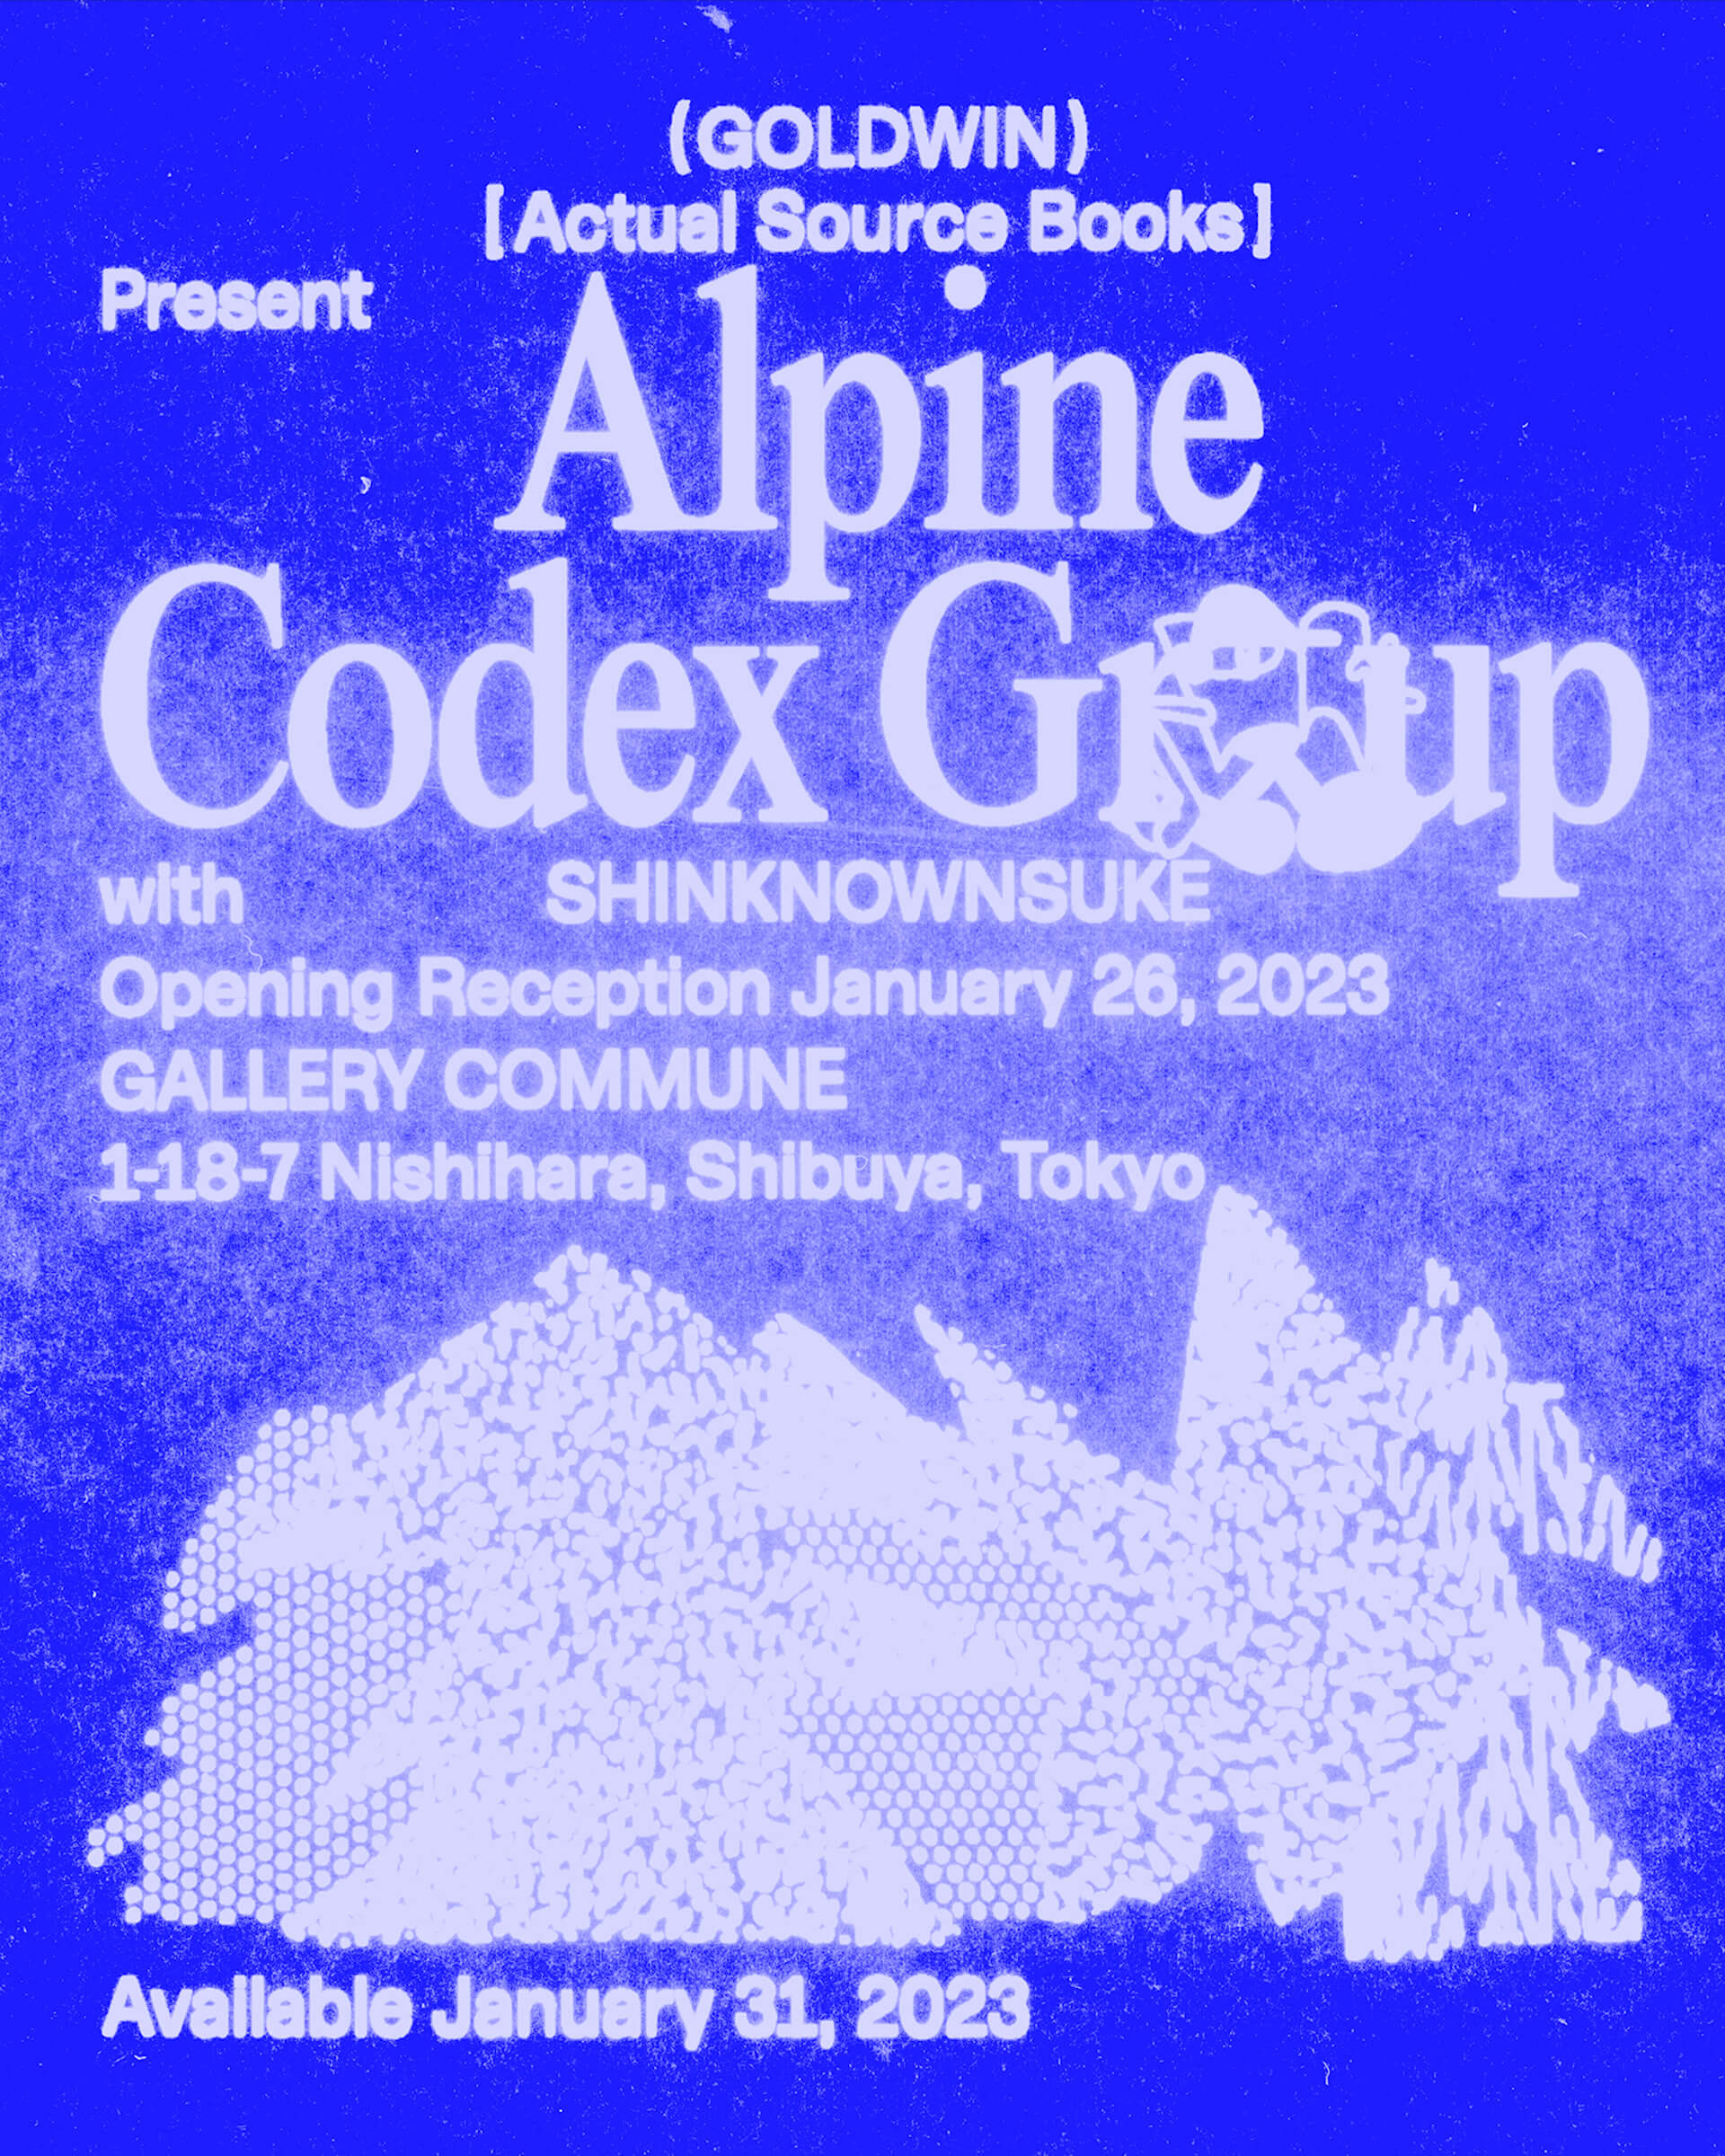 GoldwinとActual Sourceによるカプセルコレクション「Alpine Codex Group」発売｜幡ヶ谷・gallery communeでポップアップイベント開催 lifefashion230123-goldwin-actualsource6